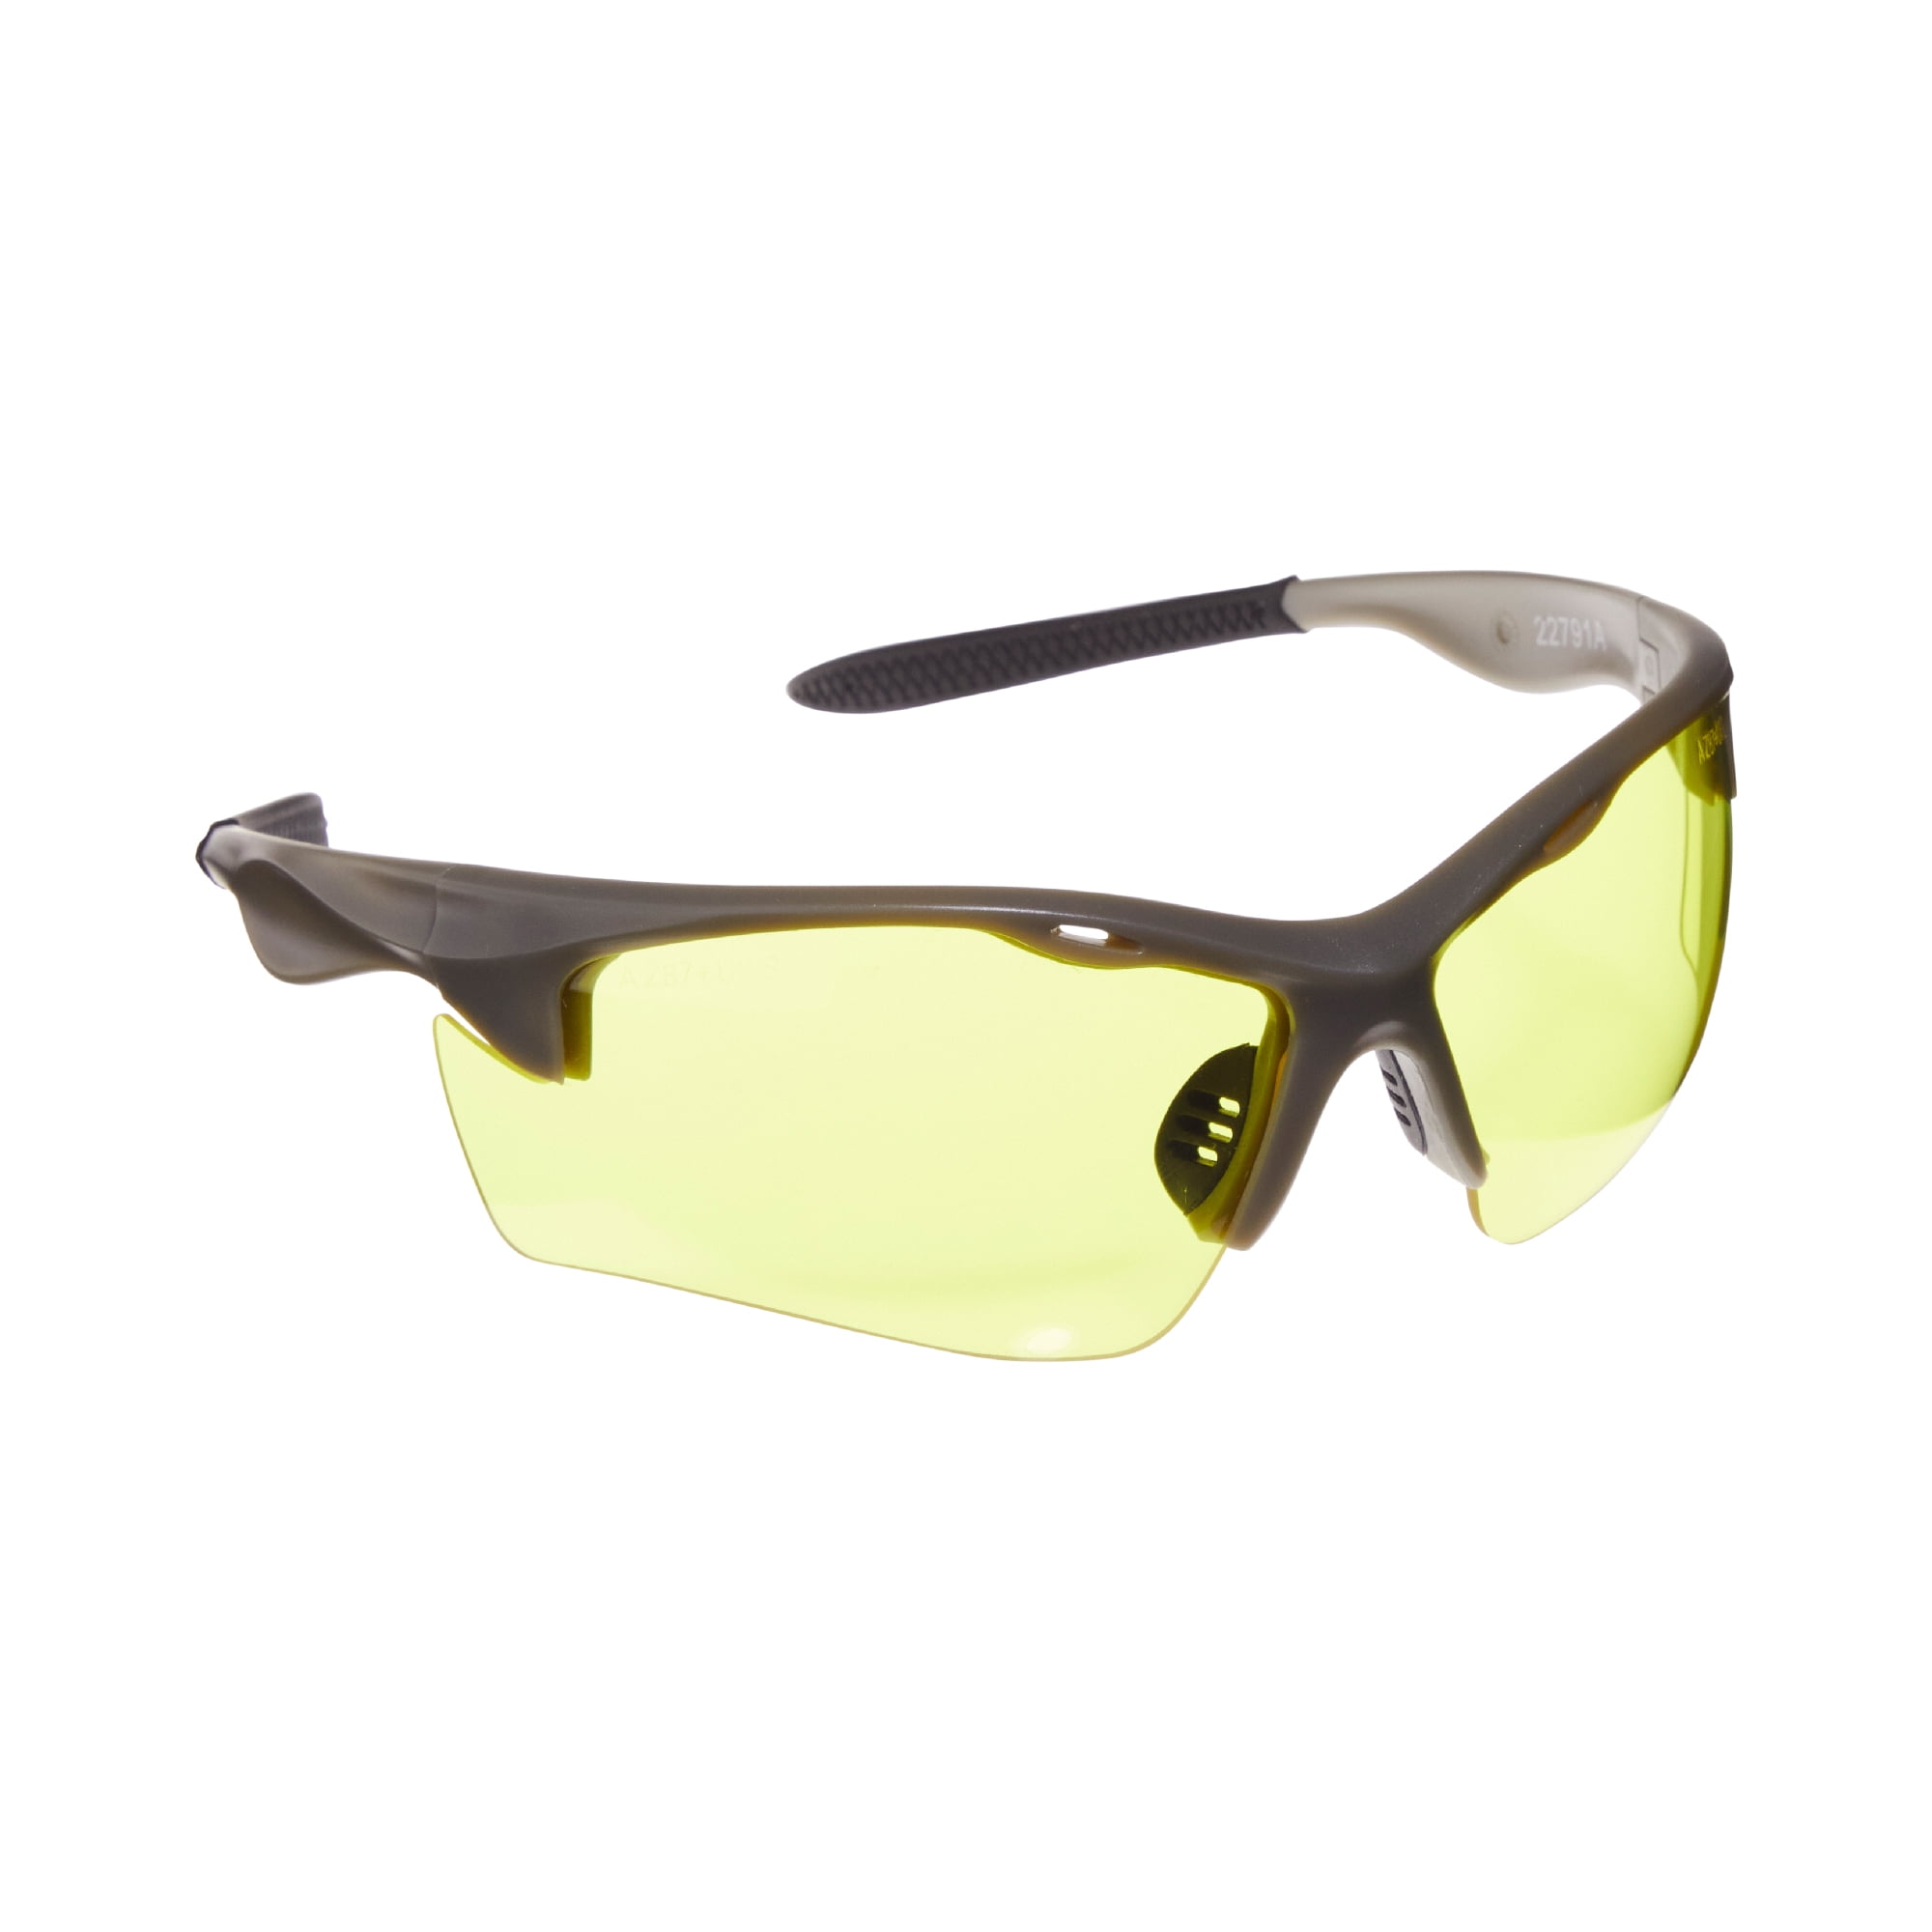 Allen Company Shooting Safety Glasses, Yellow Lenses, Wrap Around Frame, ANSI Z87 Impact Resistant